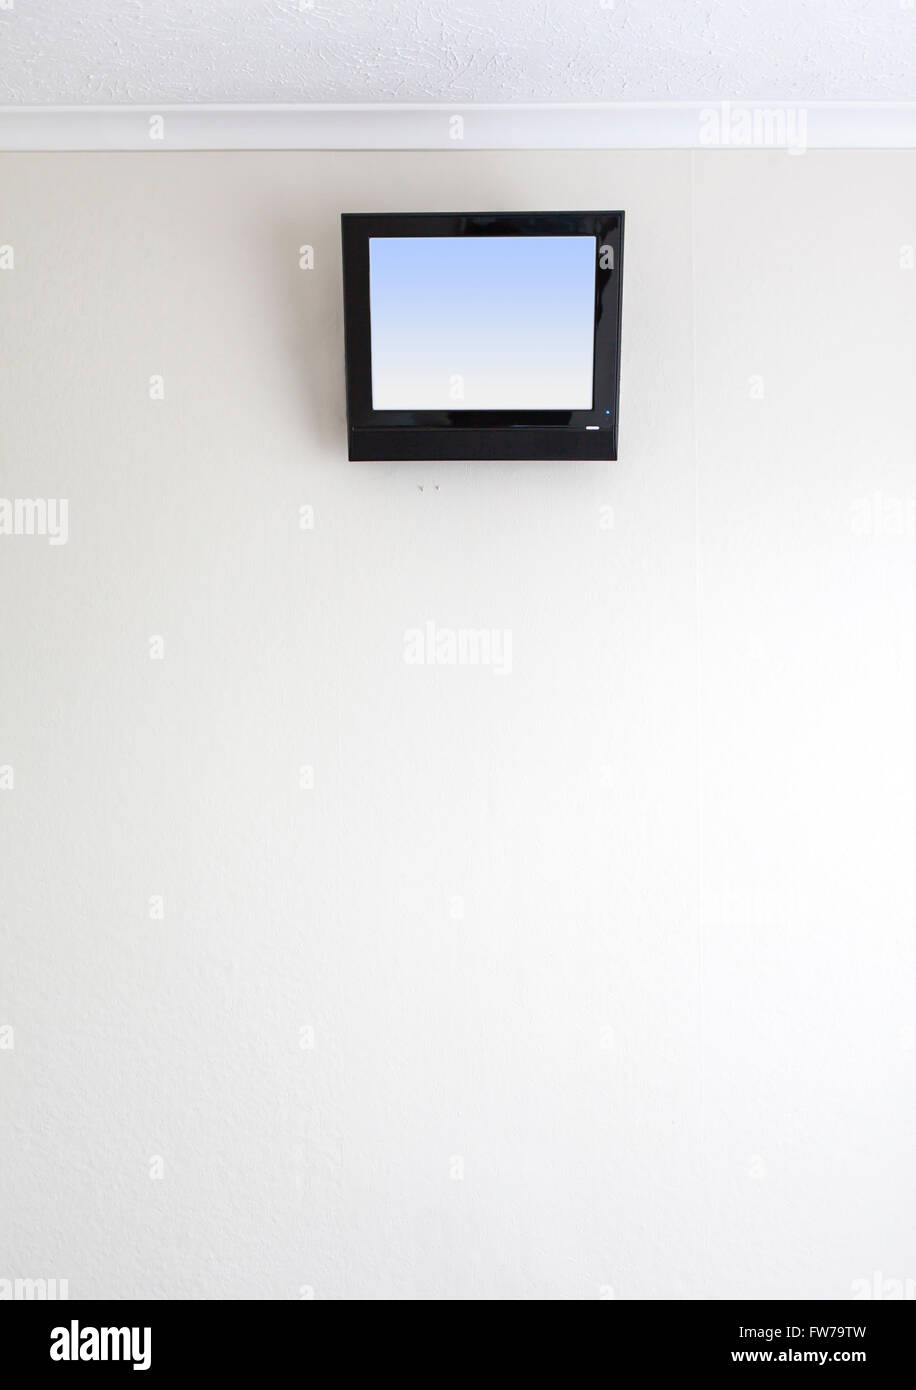 small TV on motel wall Stock Photo